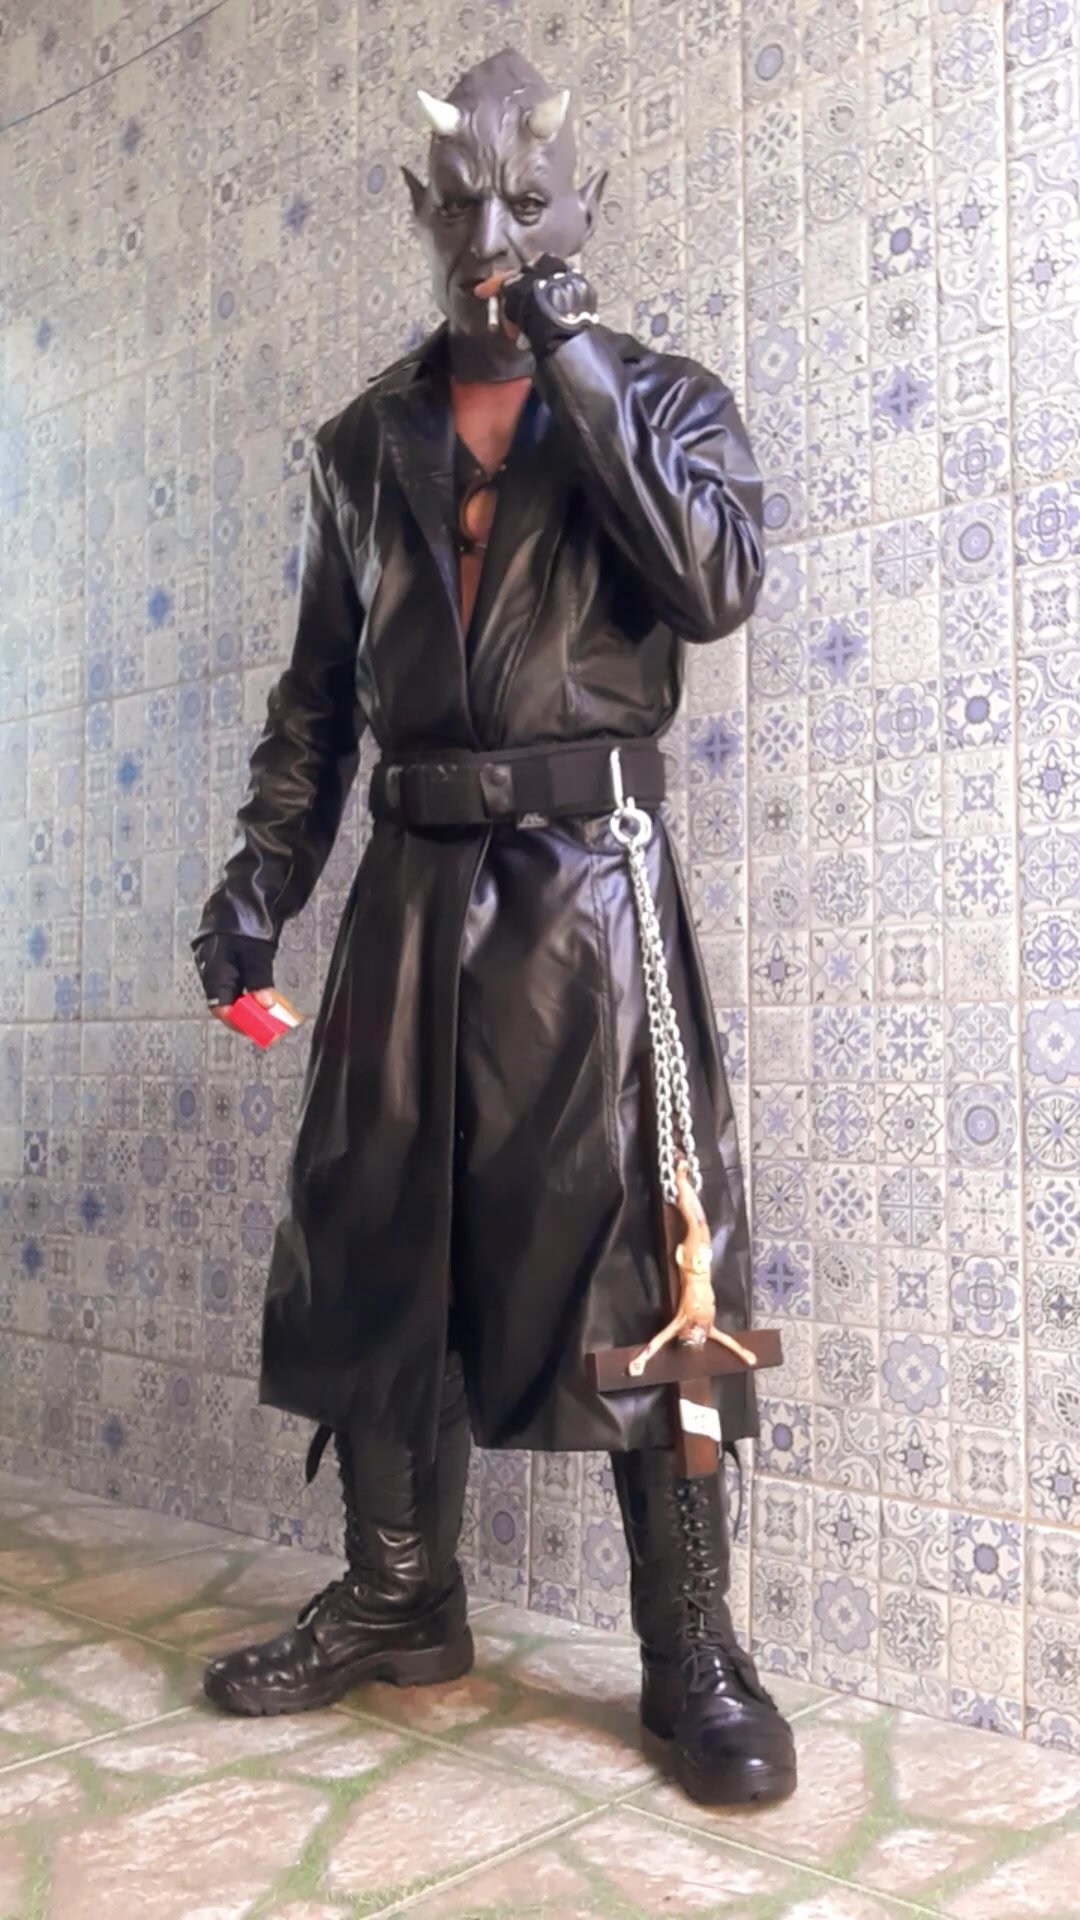 Demon with leather coat, crucifix, smoking